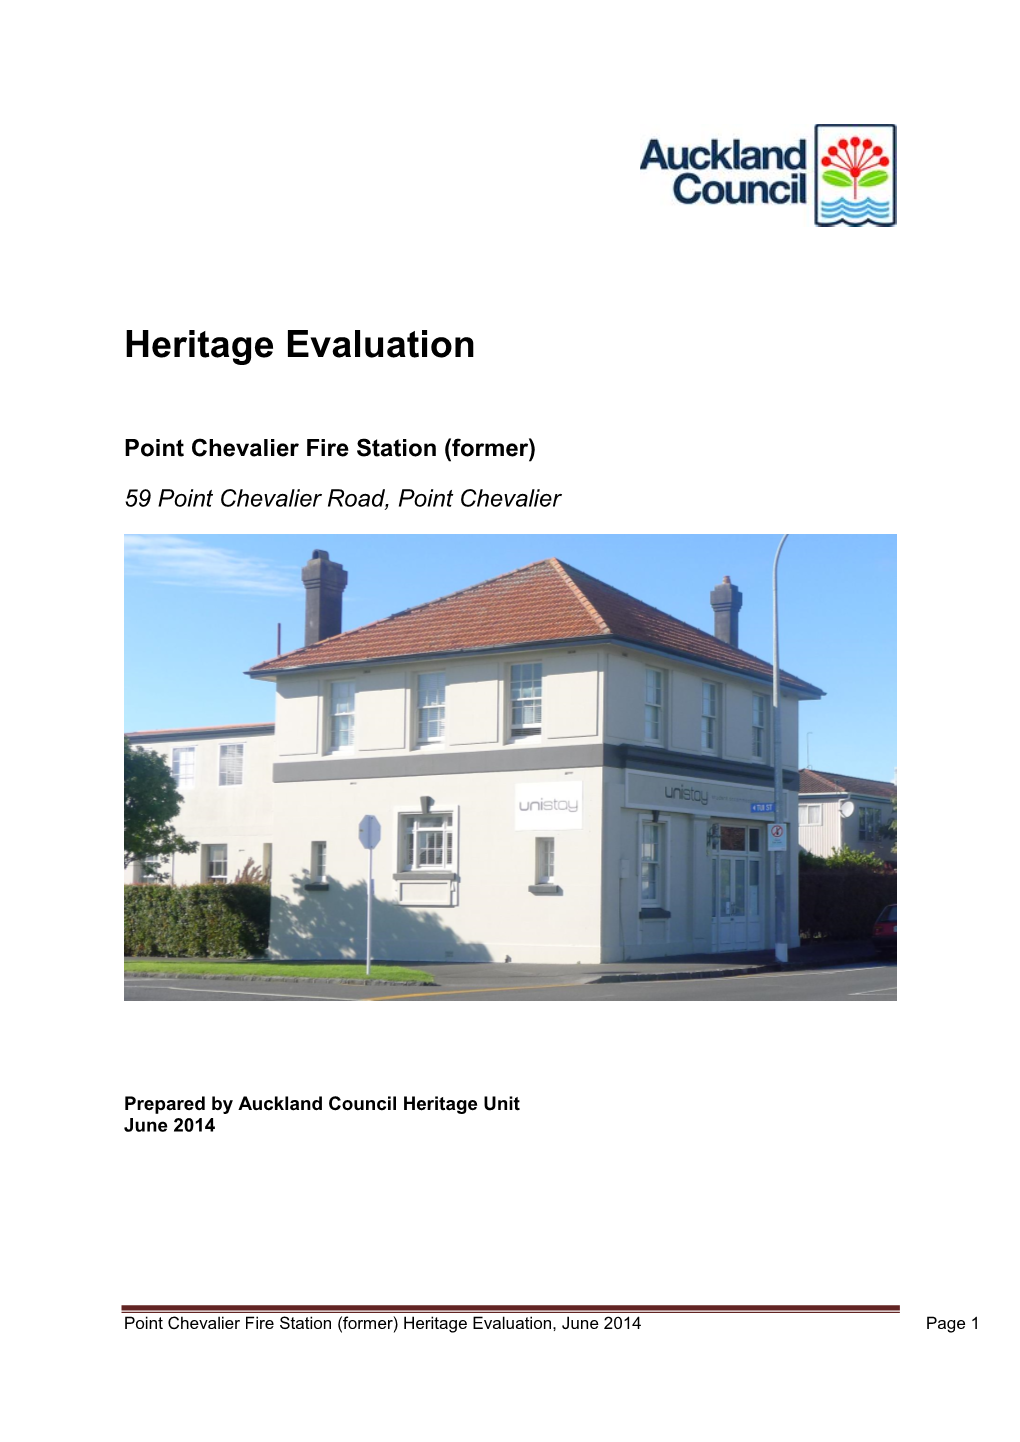 Heritage Evaluation